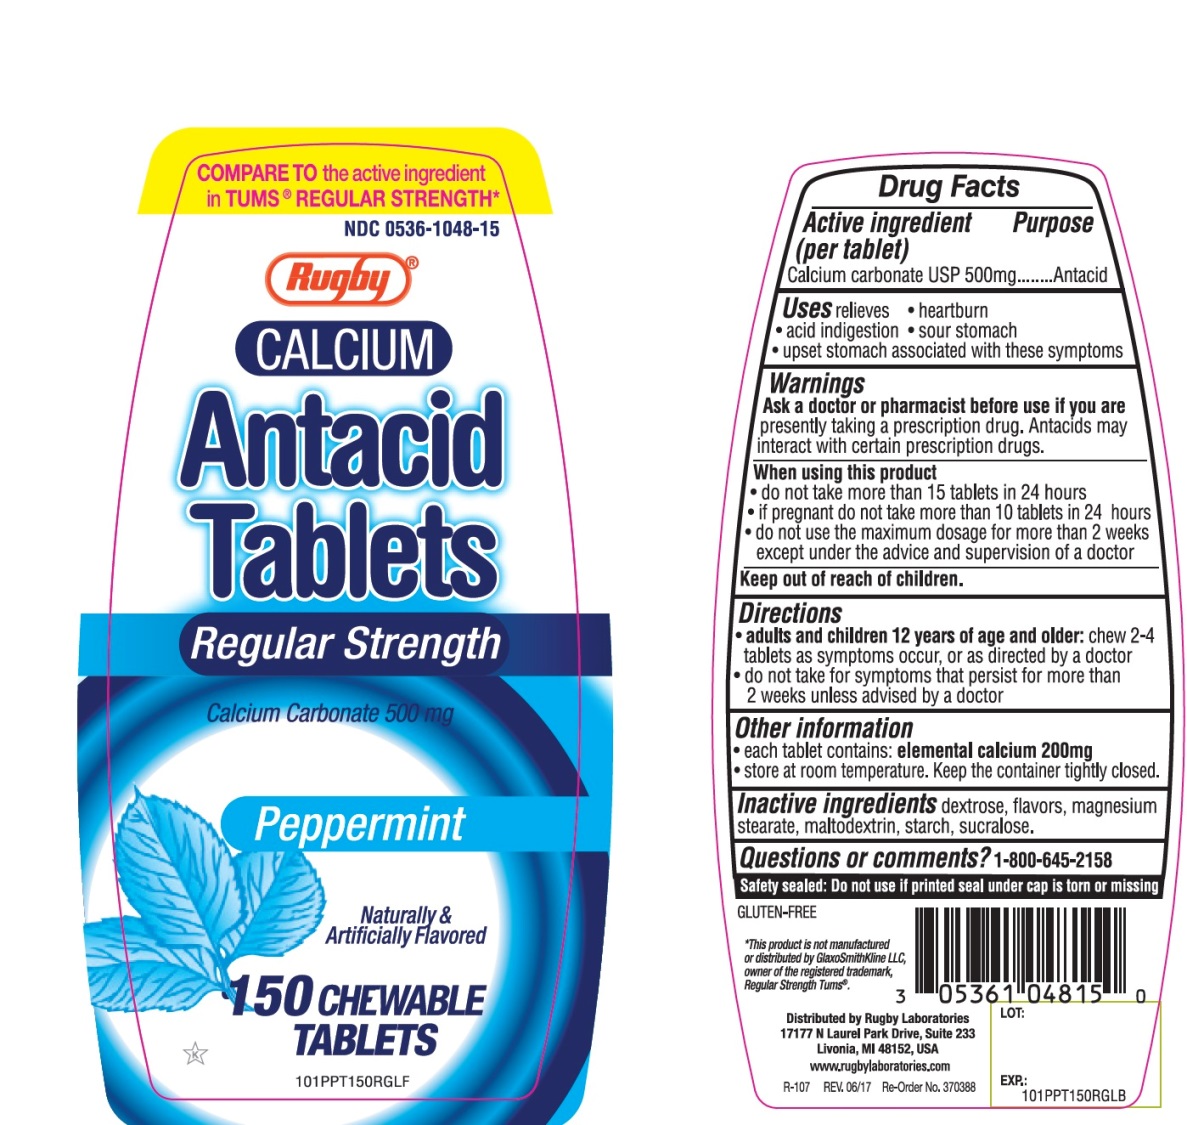 Rugby Calcium Antacid Tablets Regular Strength